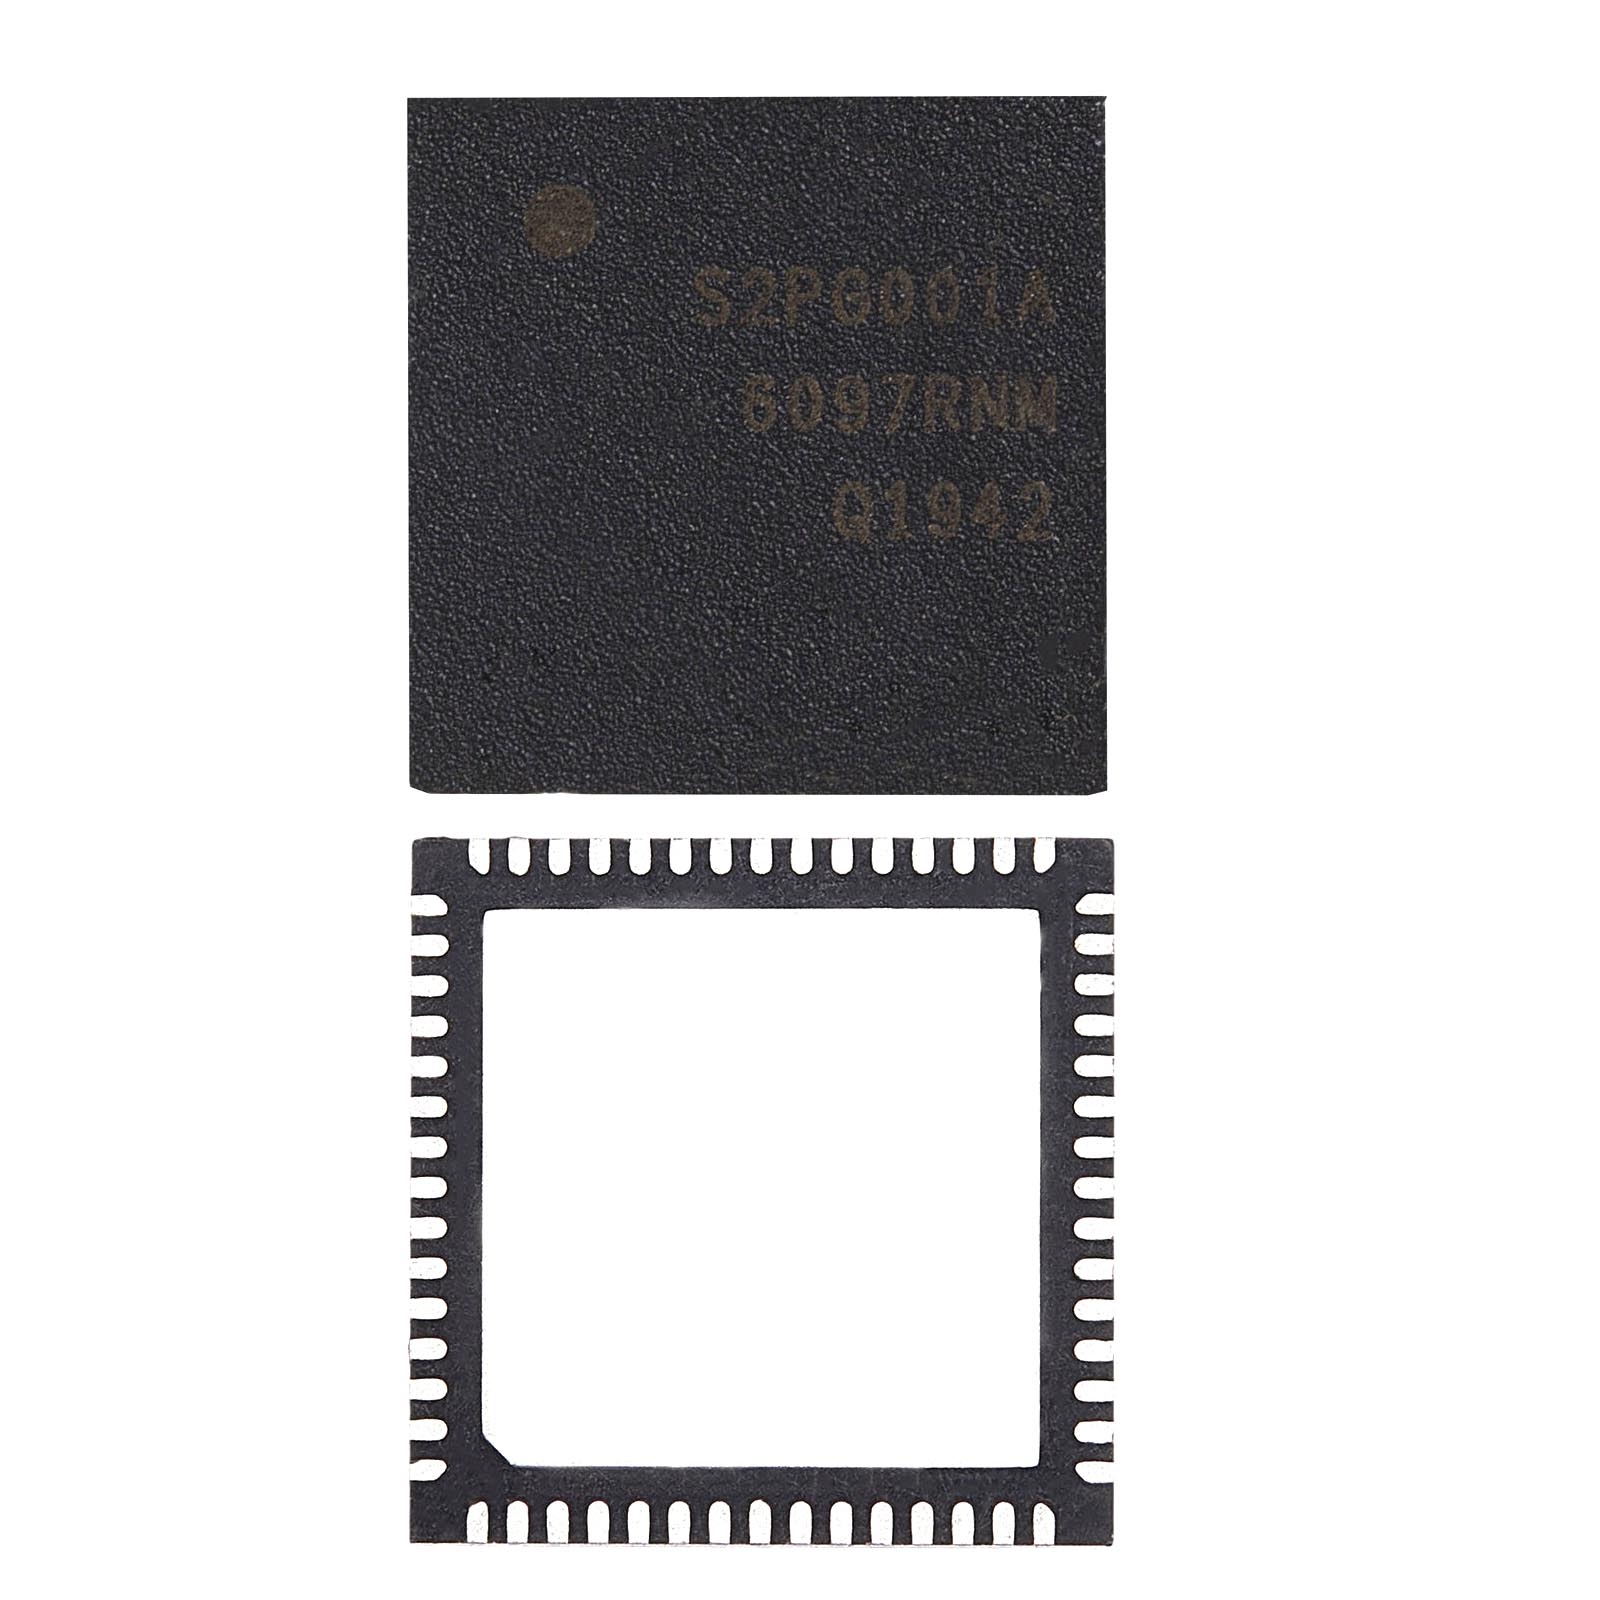 PS4 Controller ic S2PG001A QFN60